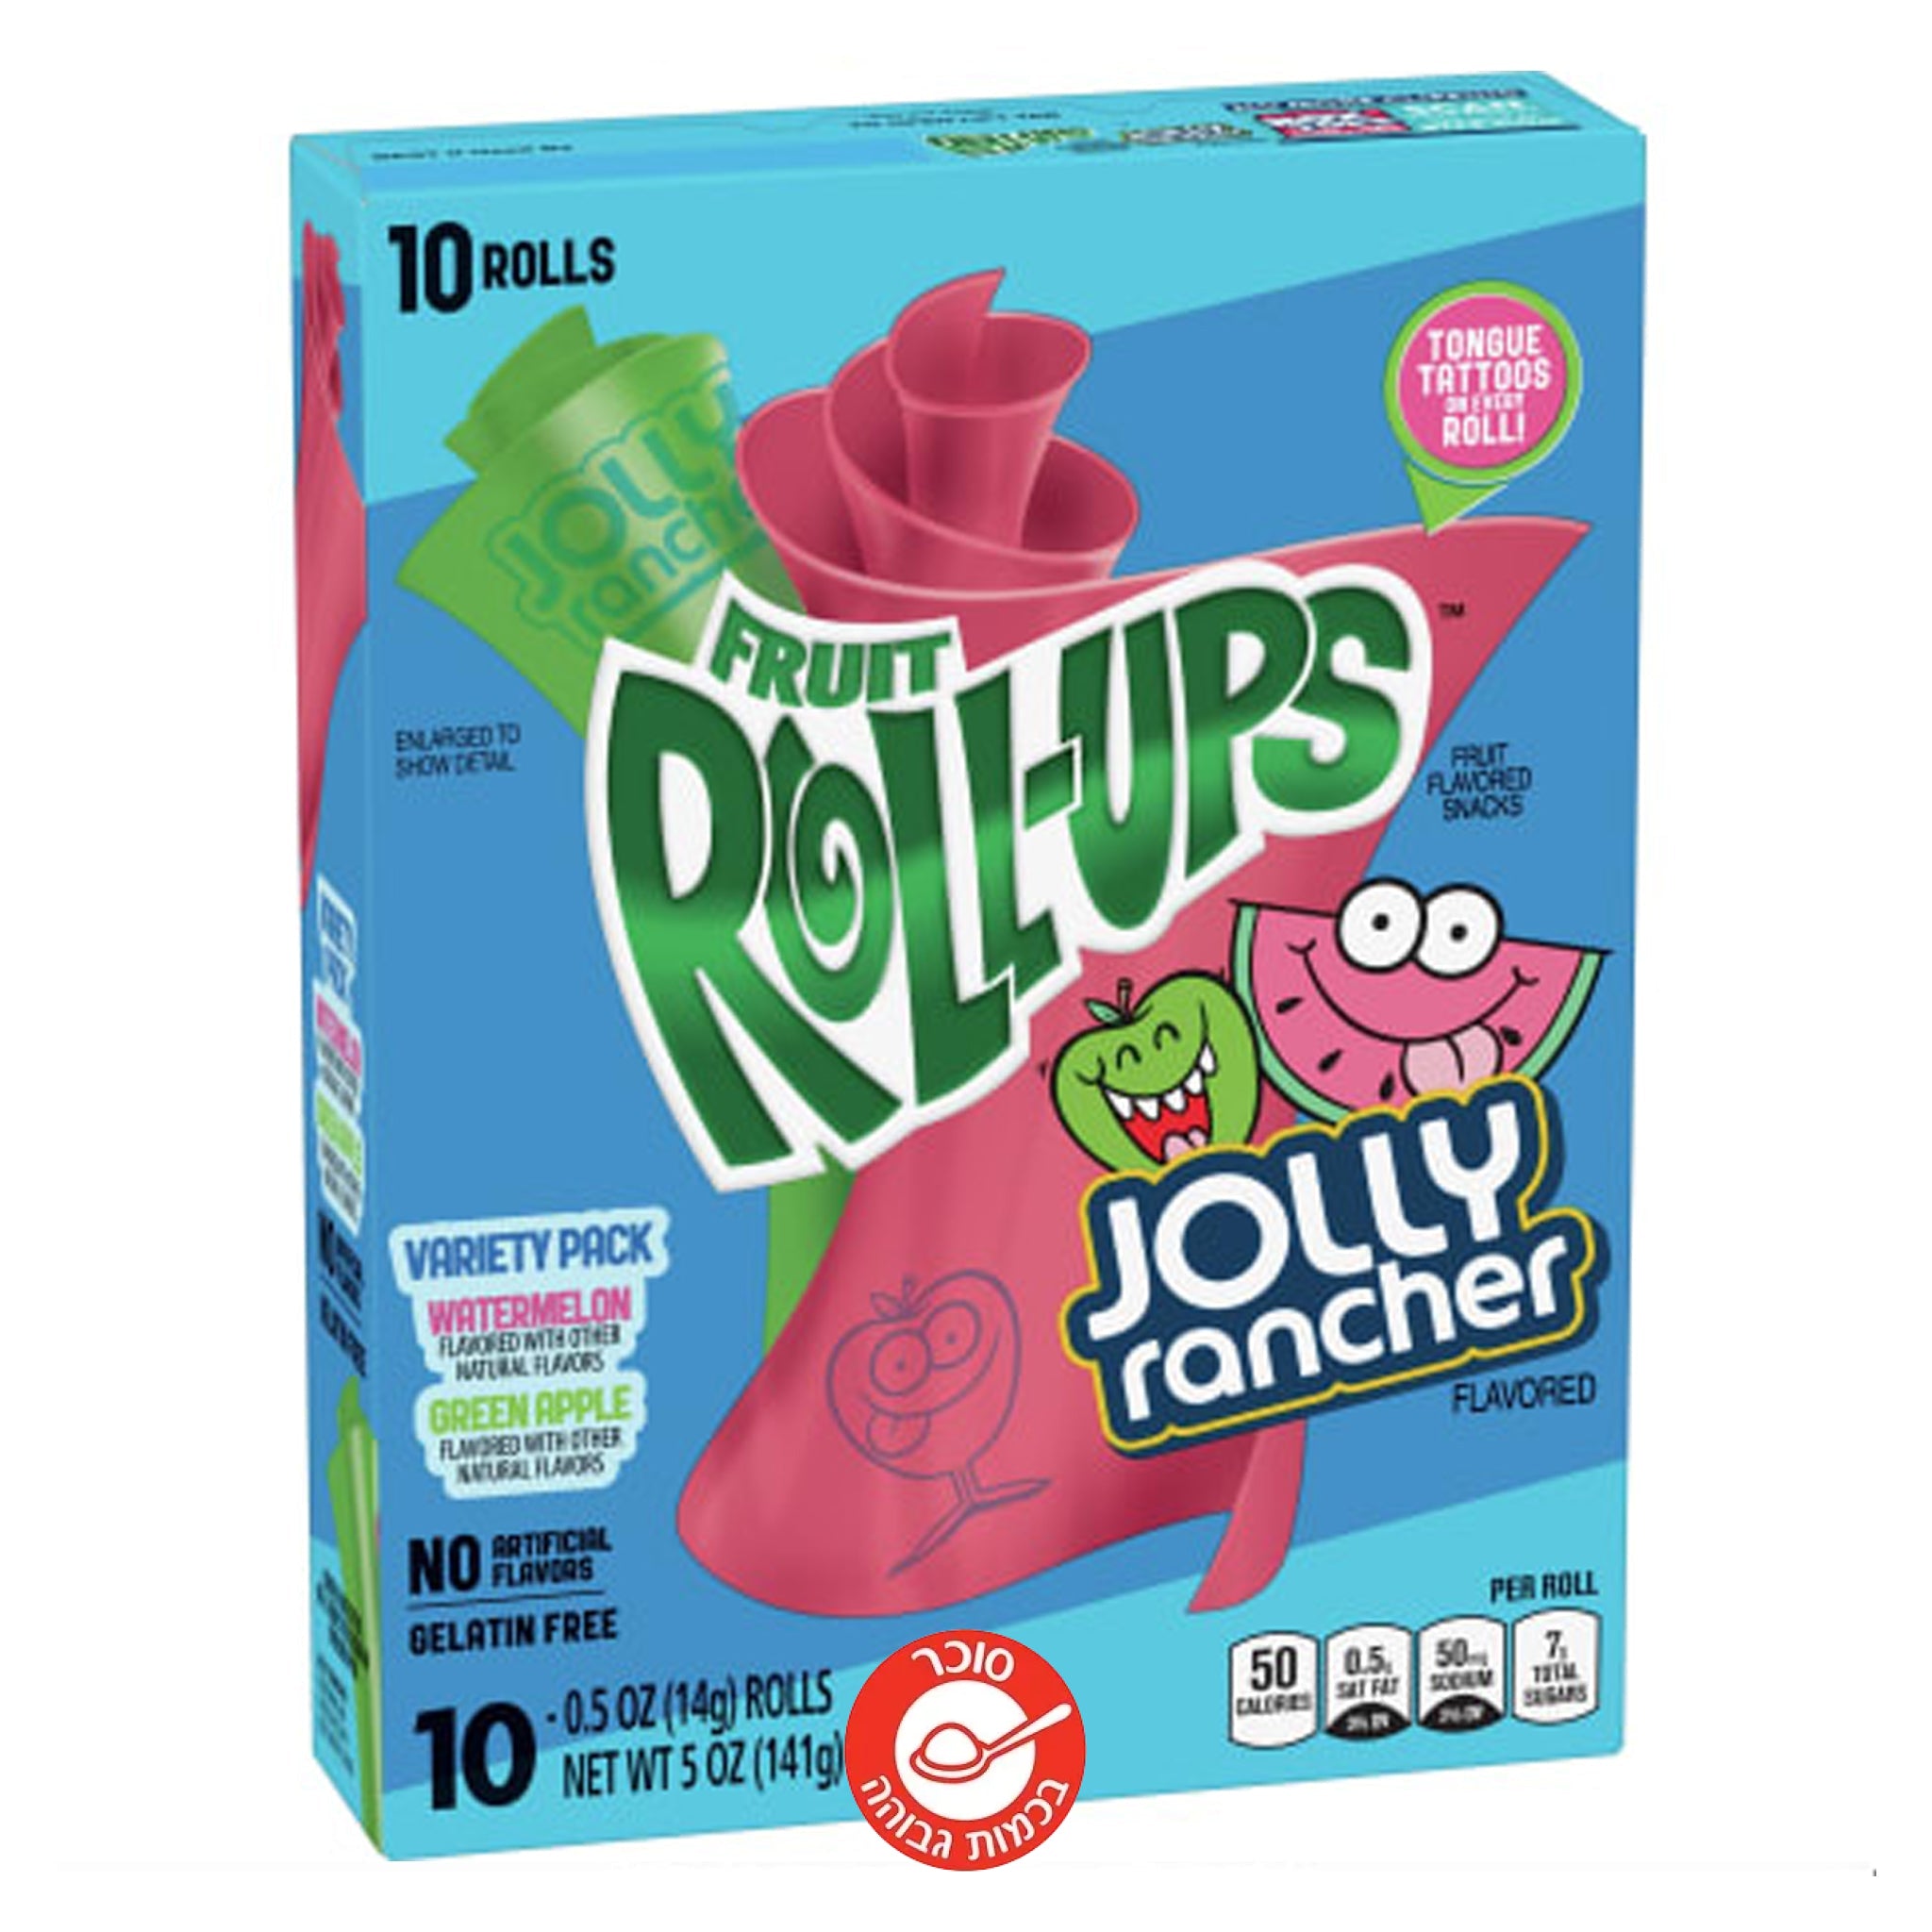 Fruit Rollups Jolly Rancher רולאפס ג’ולי ראנצ’ר בטעמי פירות חטיפים